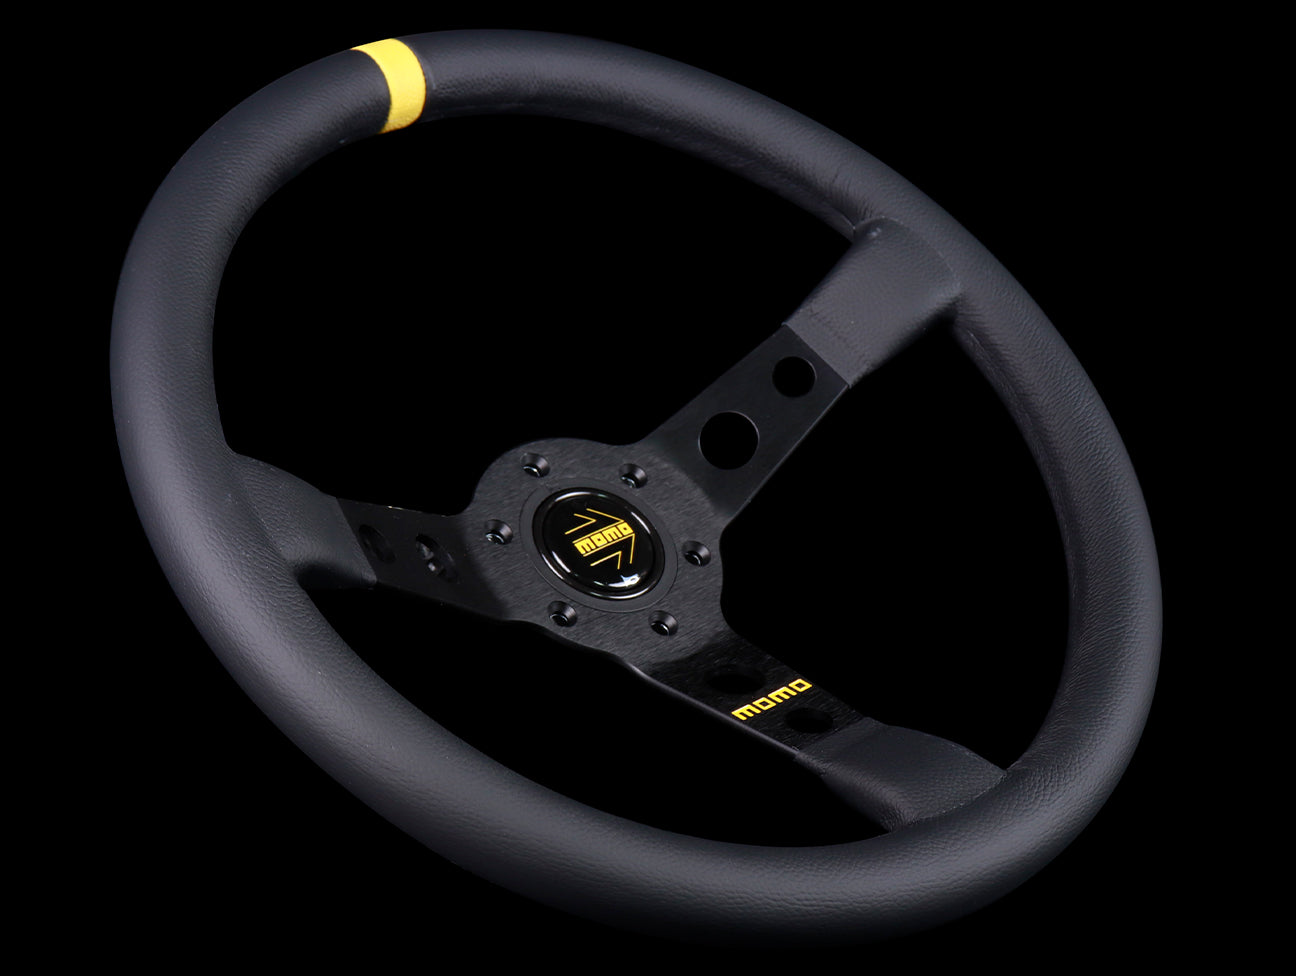 Momo Mod 07 350mm Steering Wheel - Leather